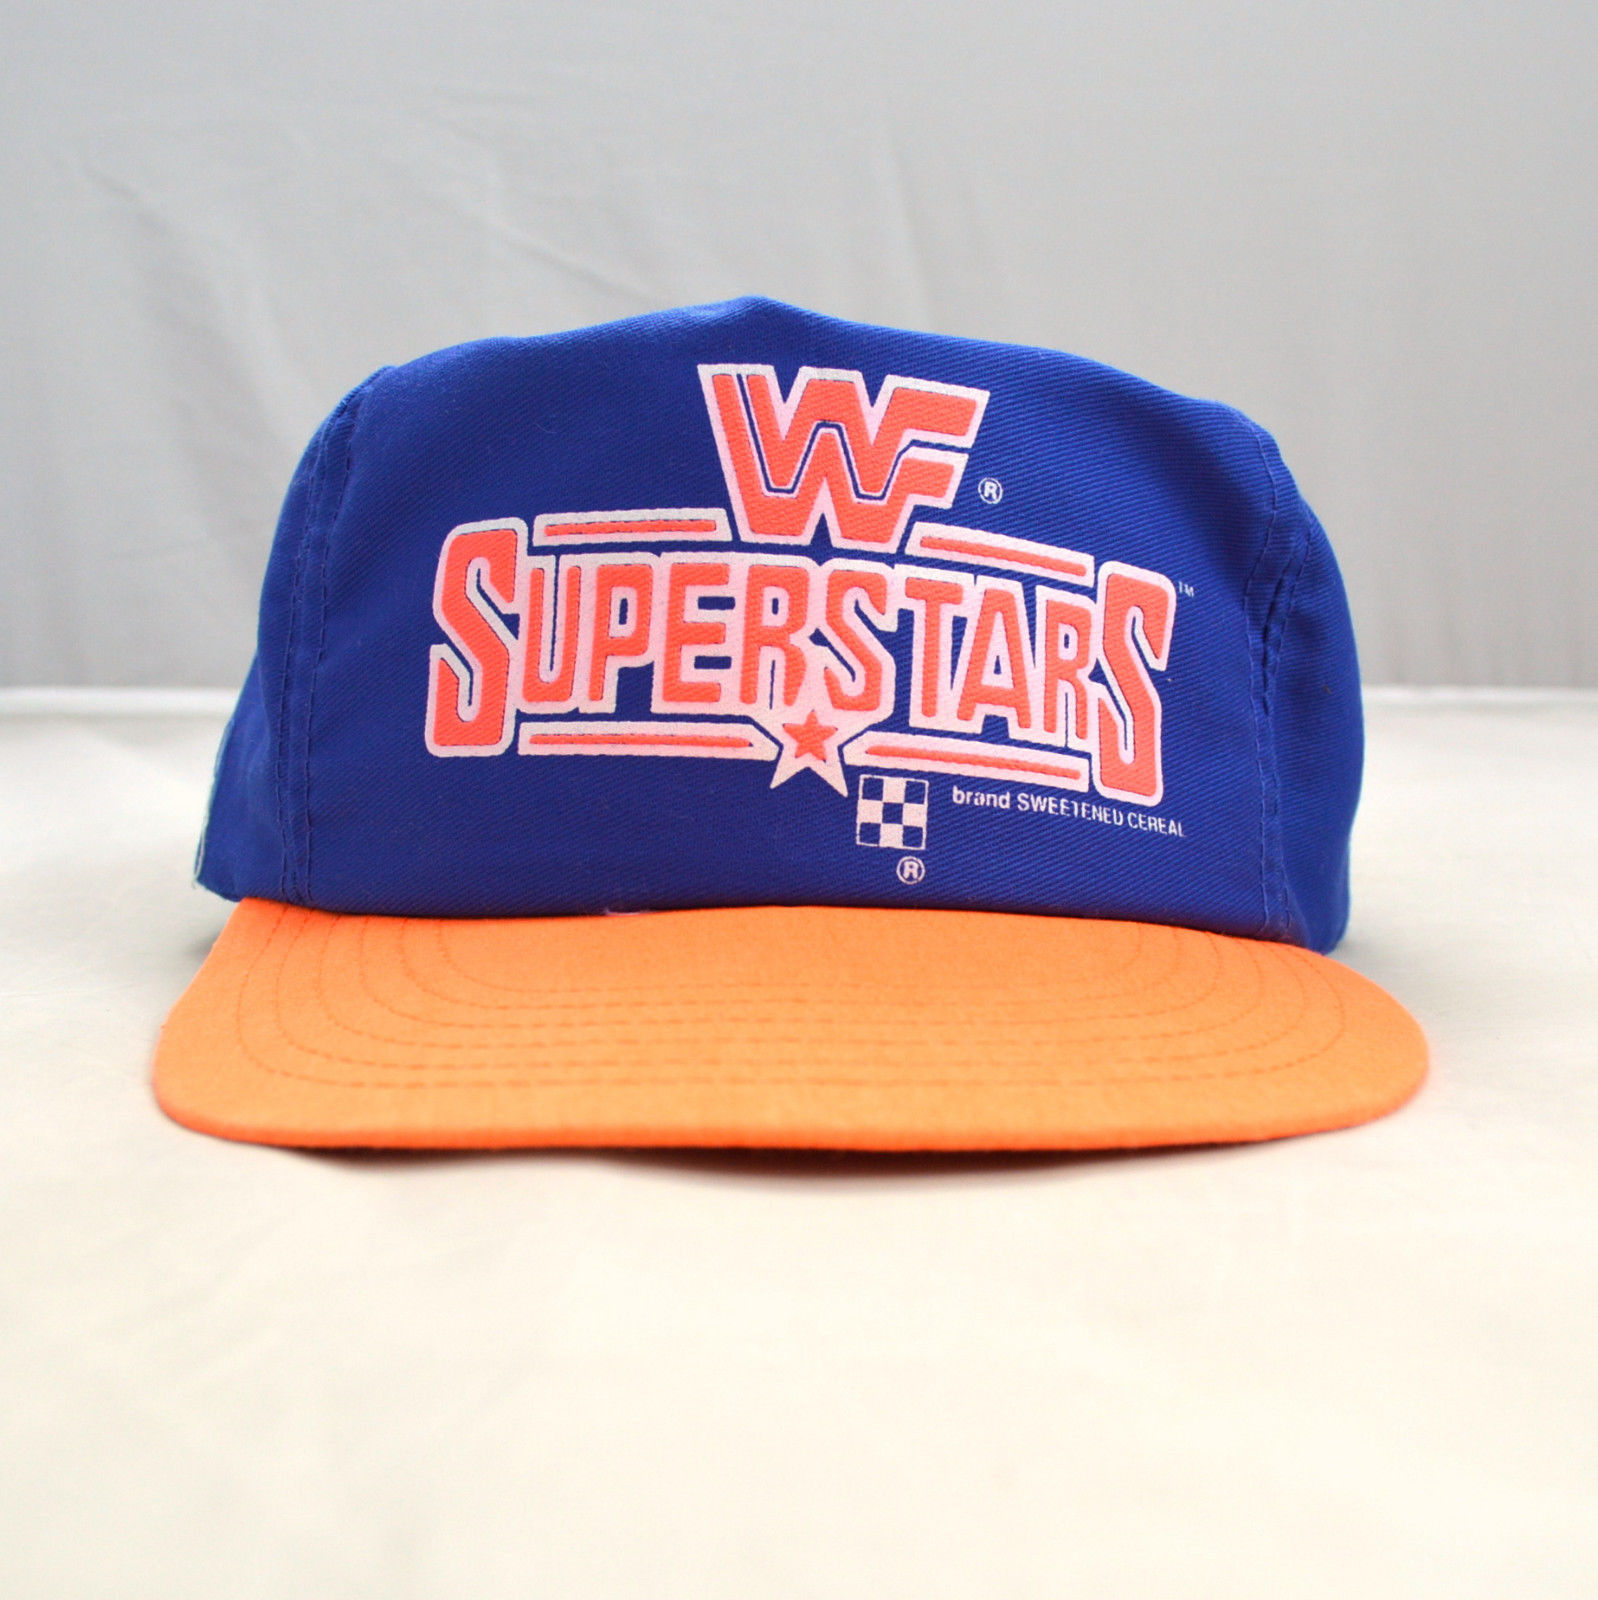 WWF Superstars Cereal cap hat 1